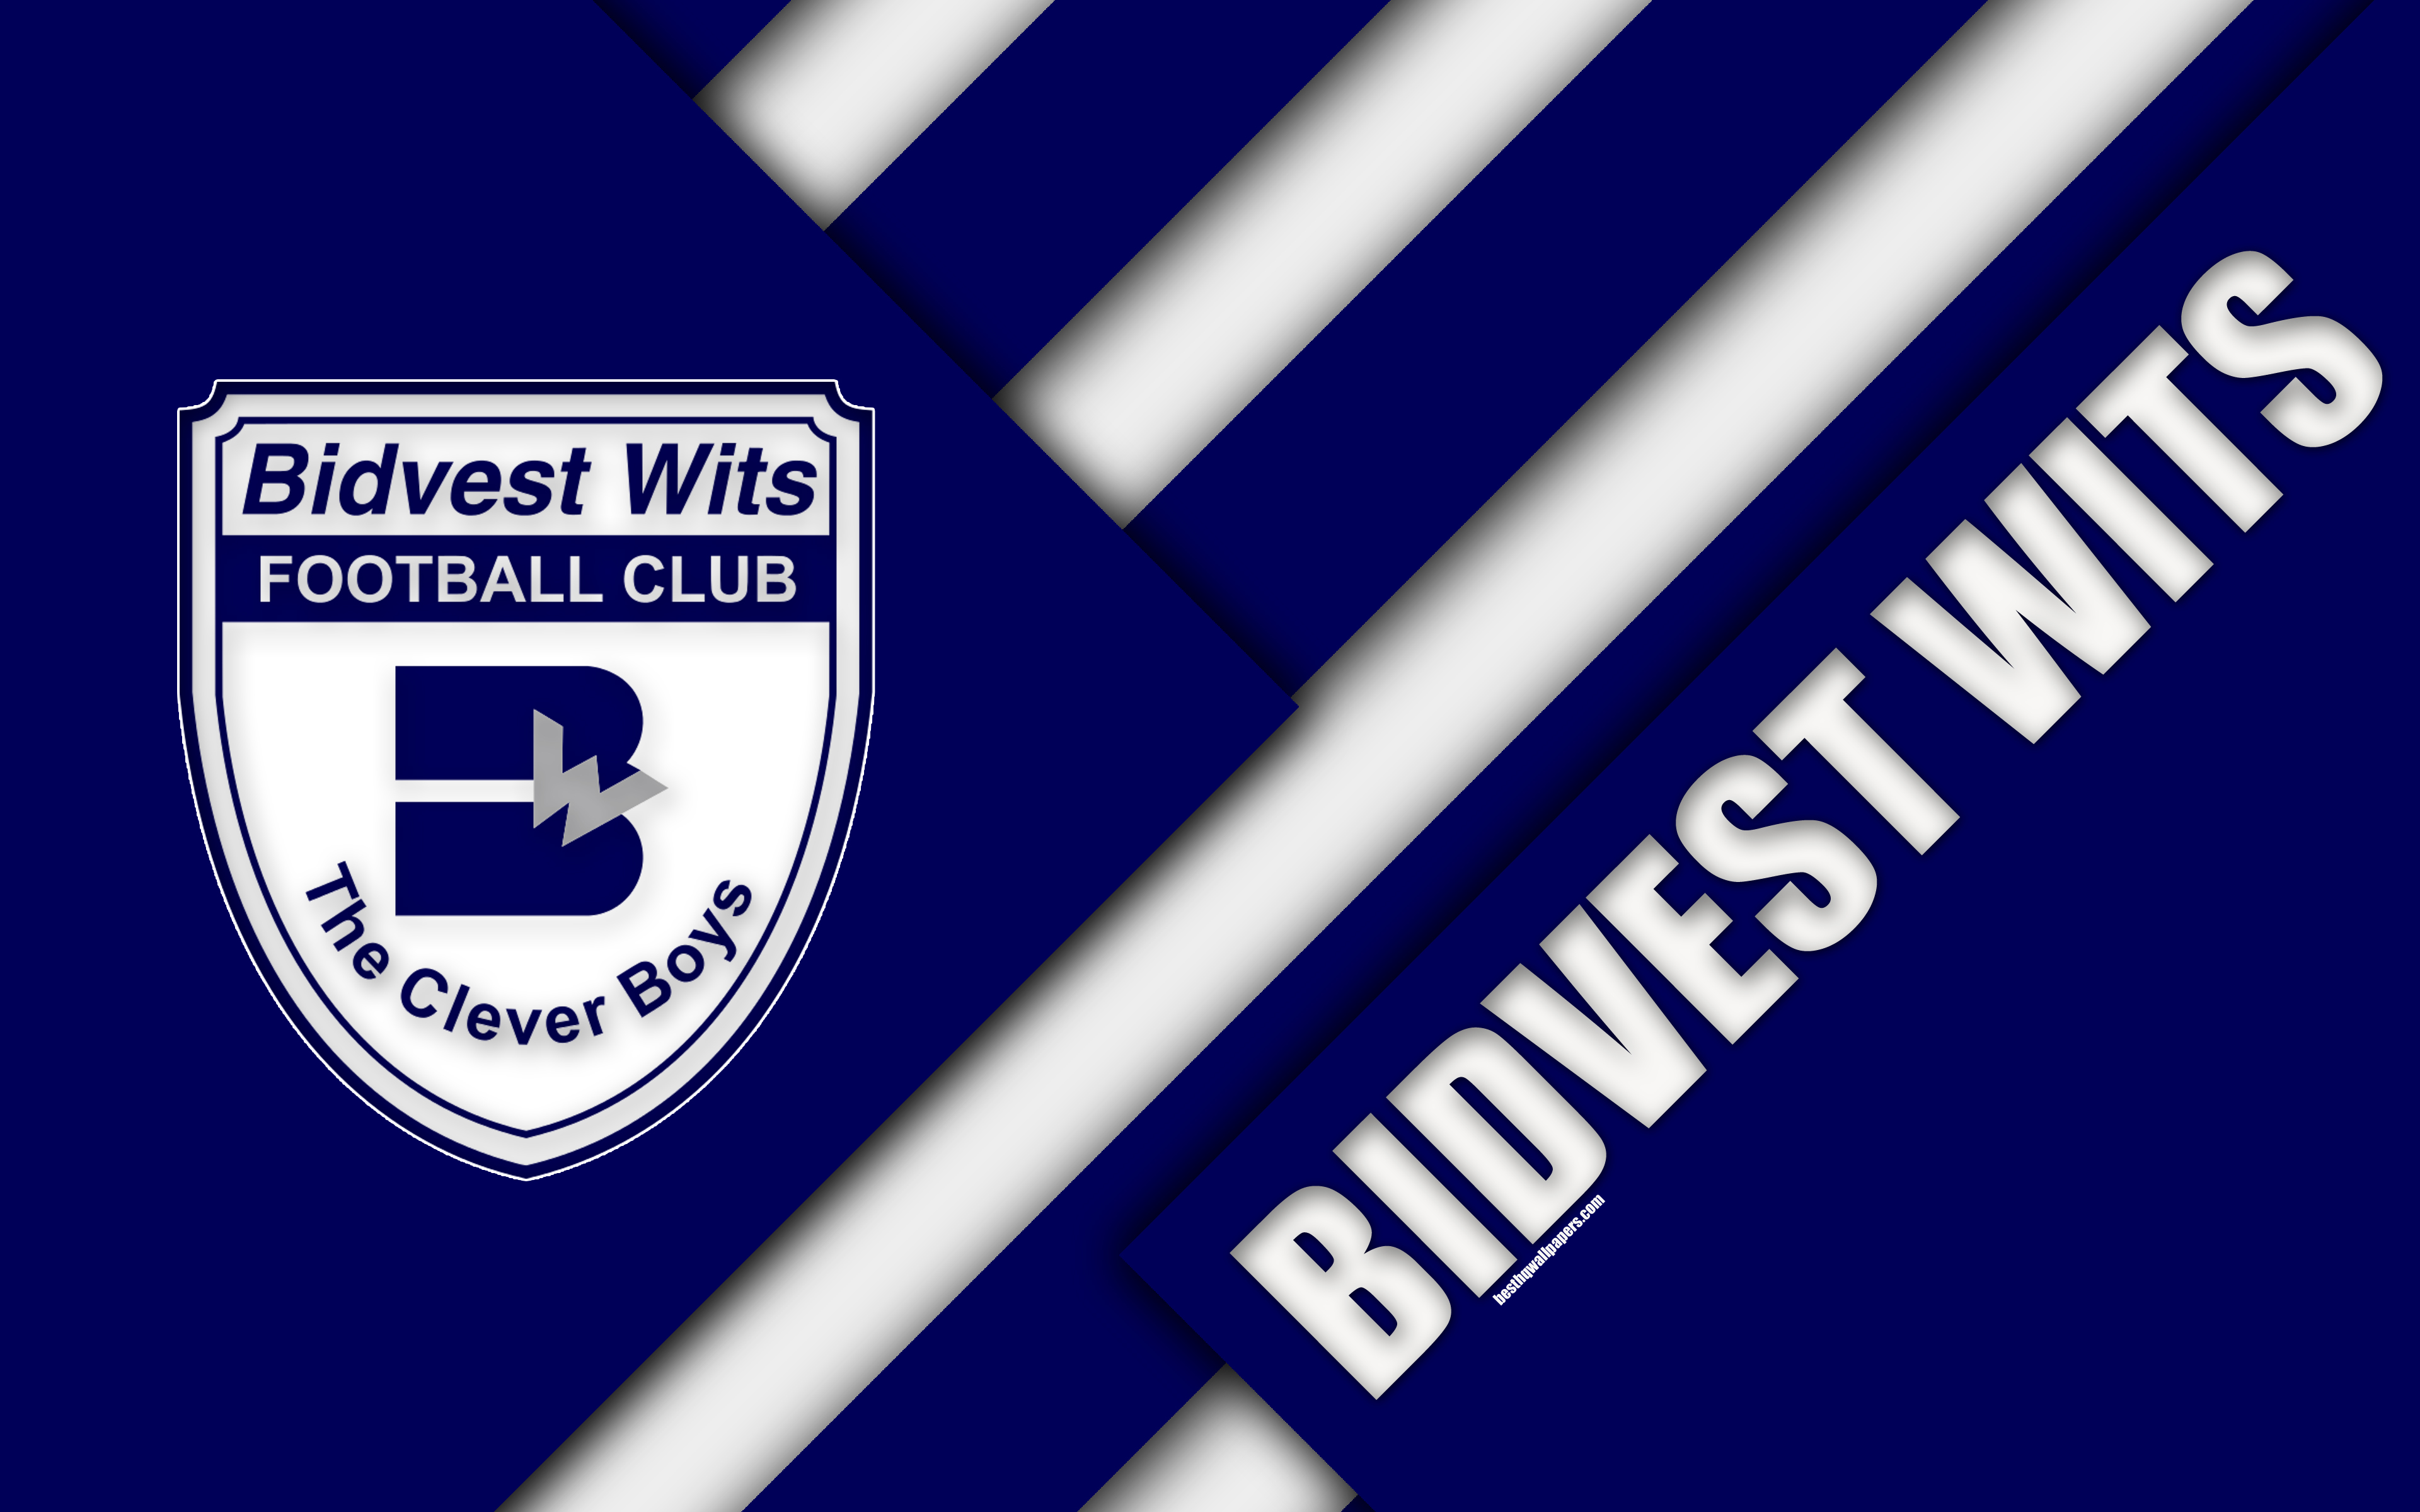 Download wallpaper Bidvest Wits FC, 4k, South African Football Club